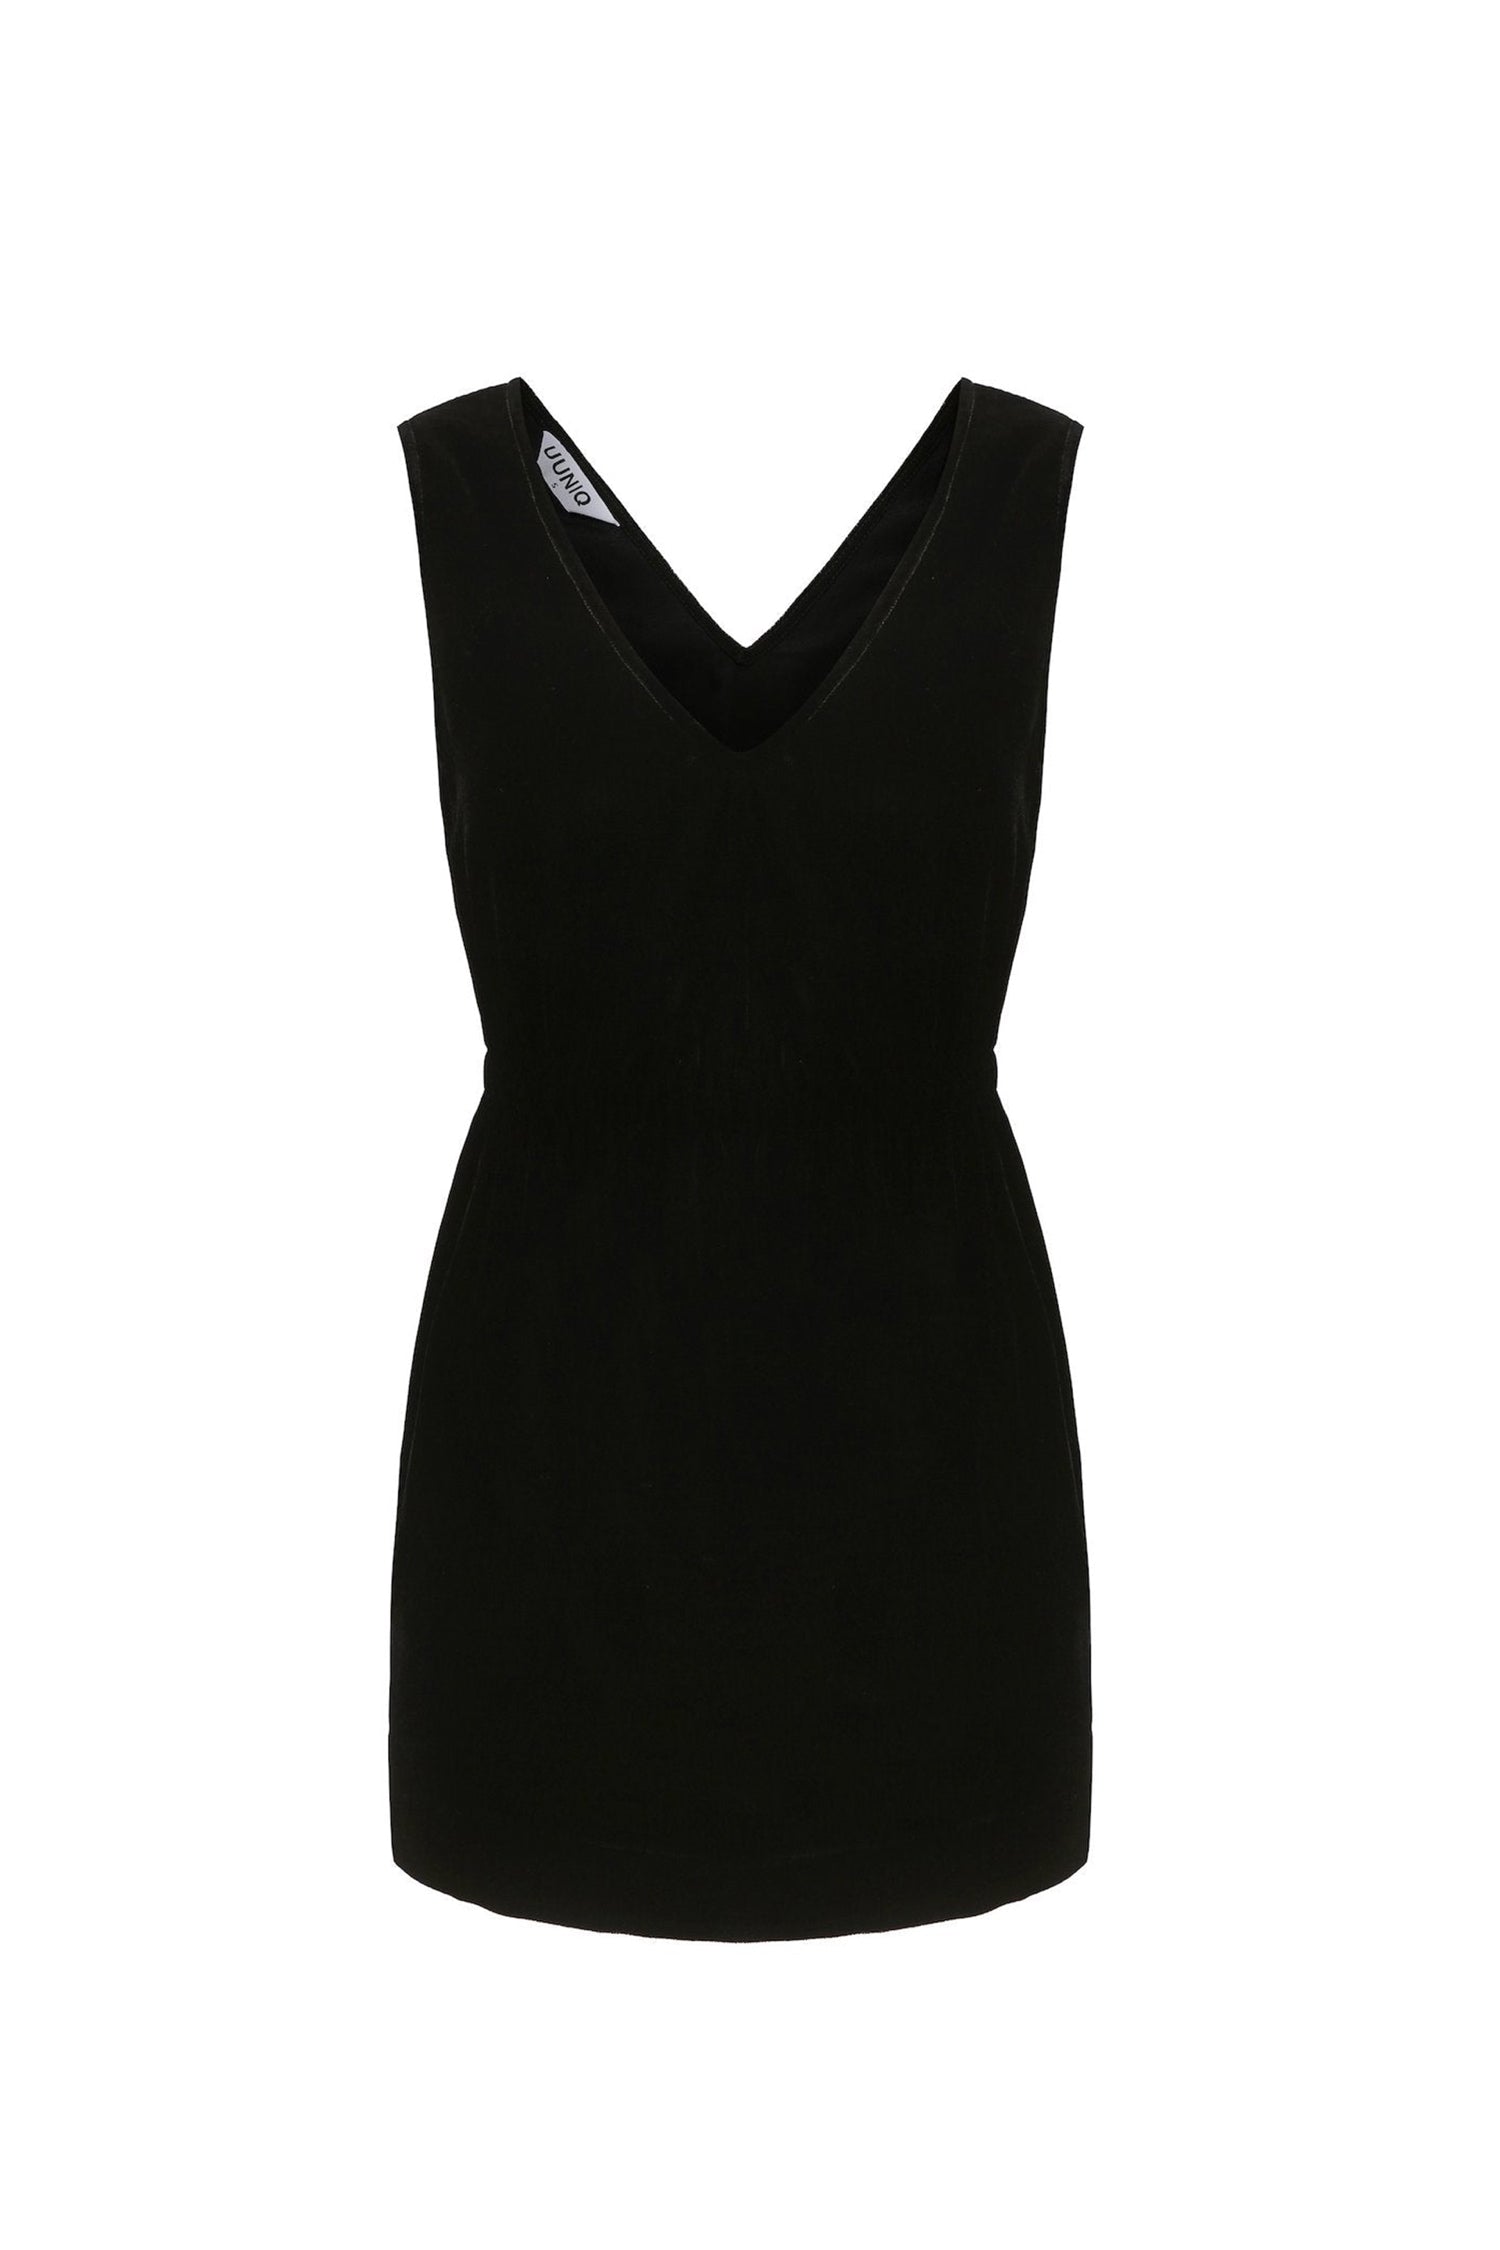 UUNIQ FEARLESS  Black Velvet V-neck Mini Dress (No Lining Top)